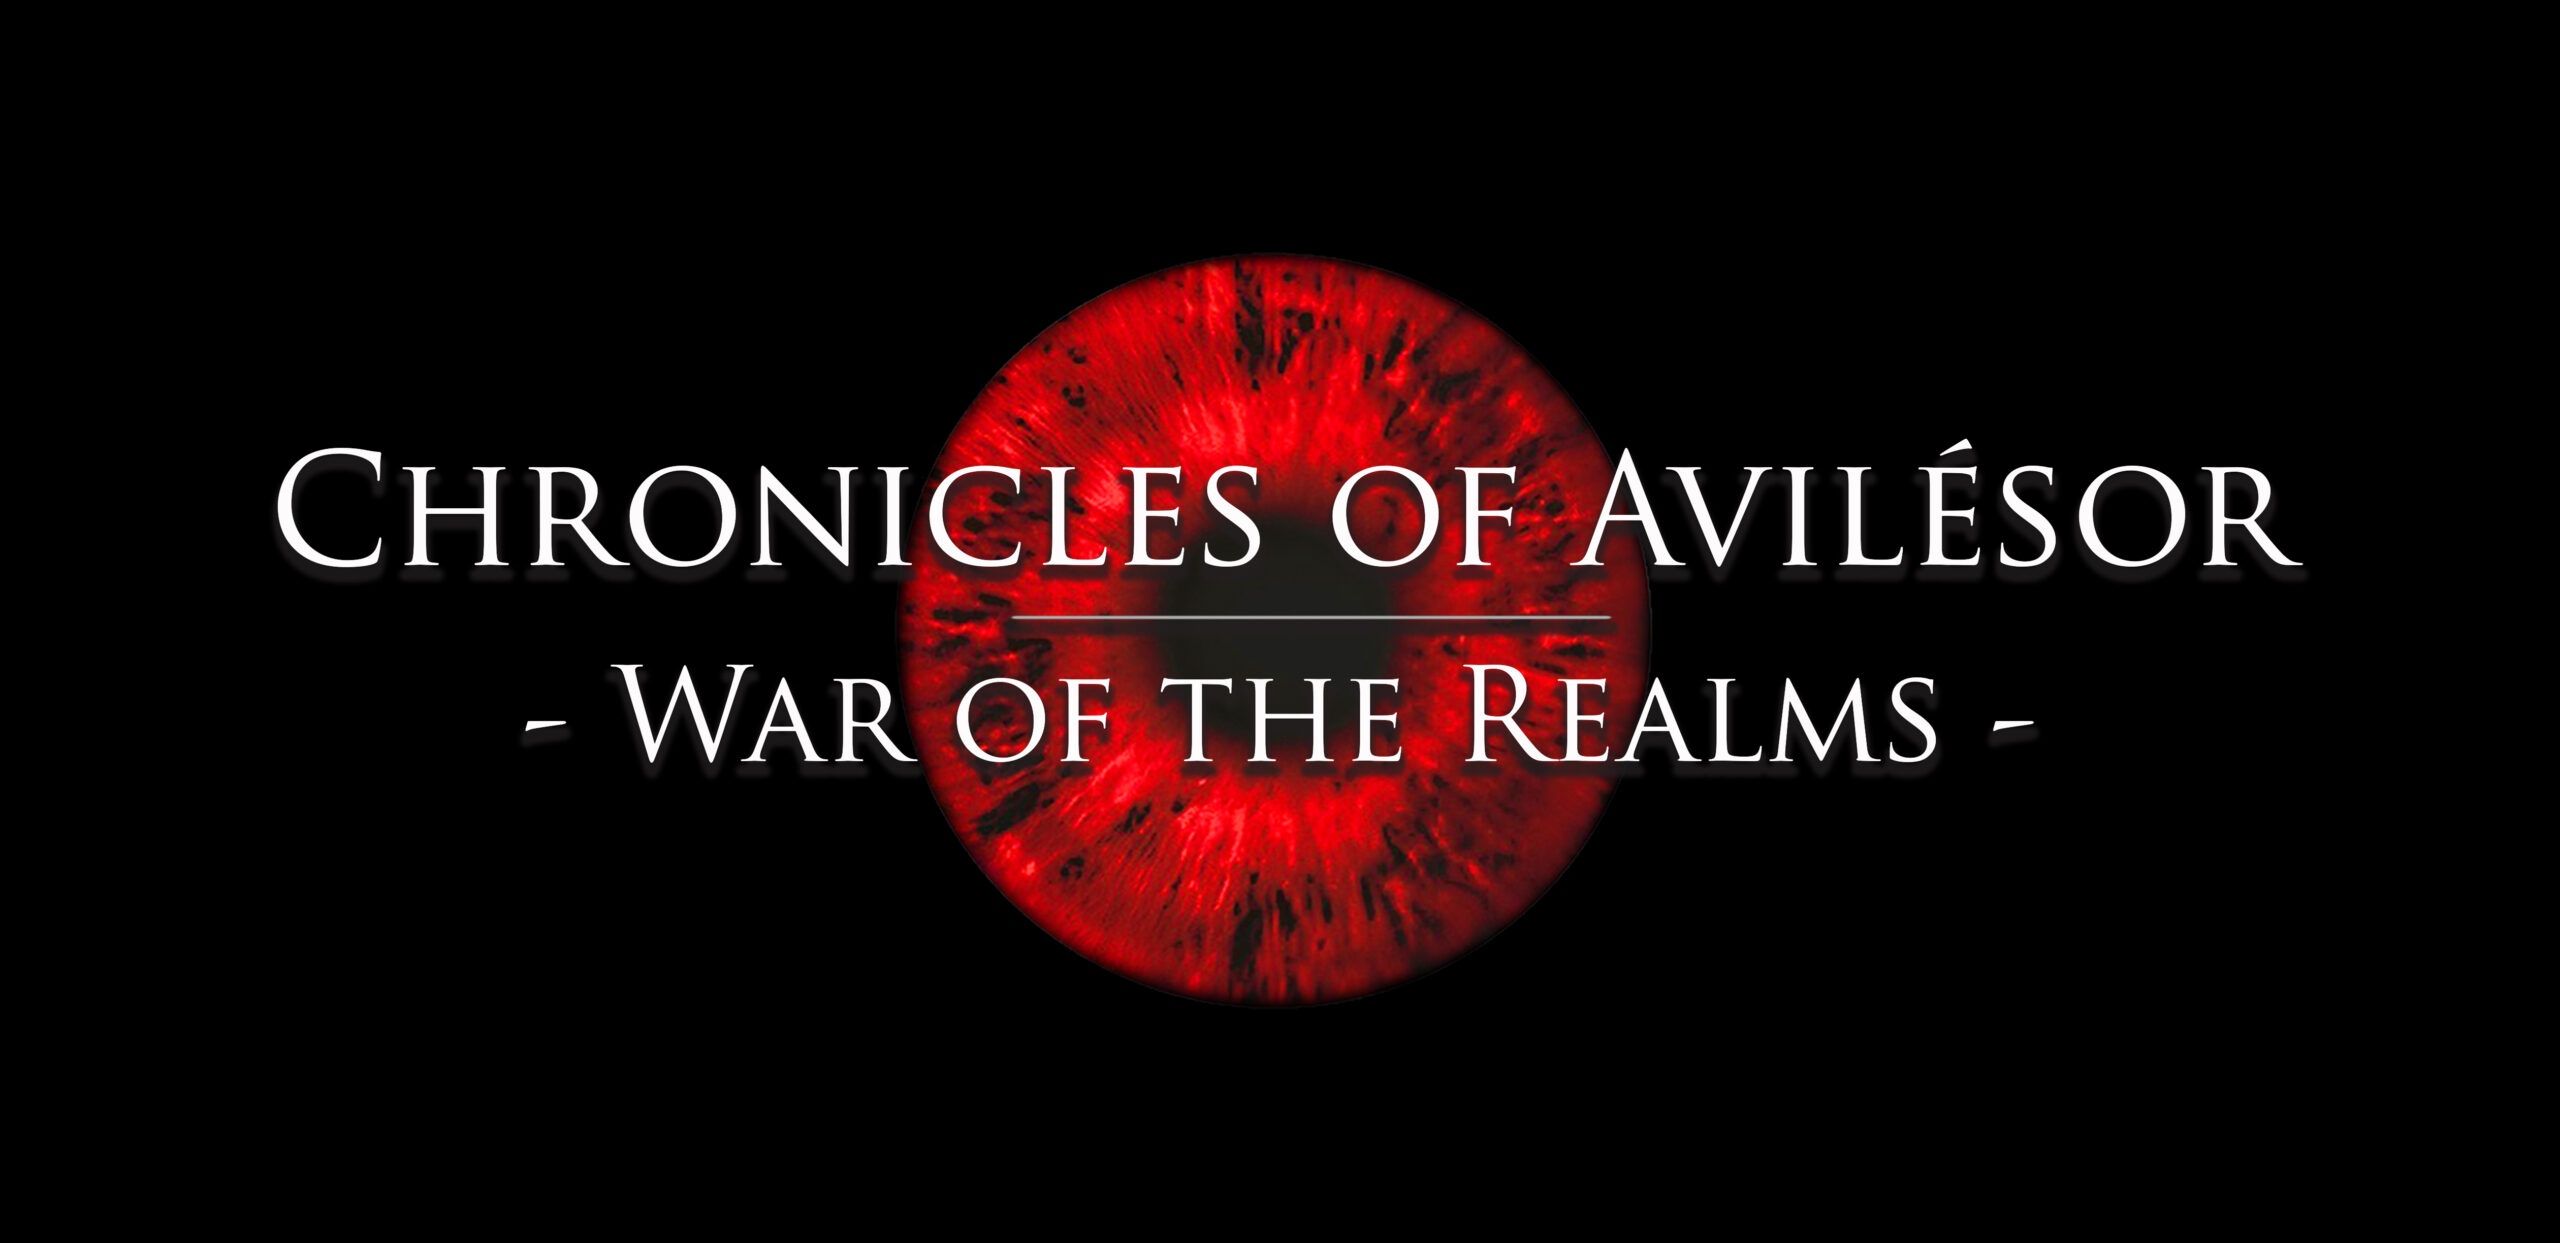 Chronicles of Avilesor: War of the Realms